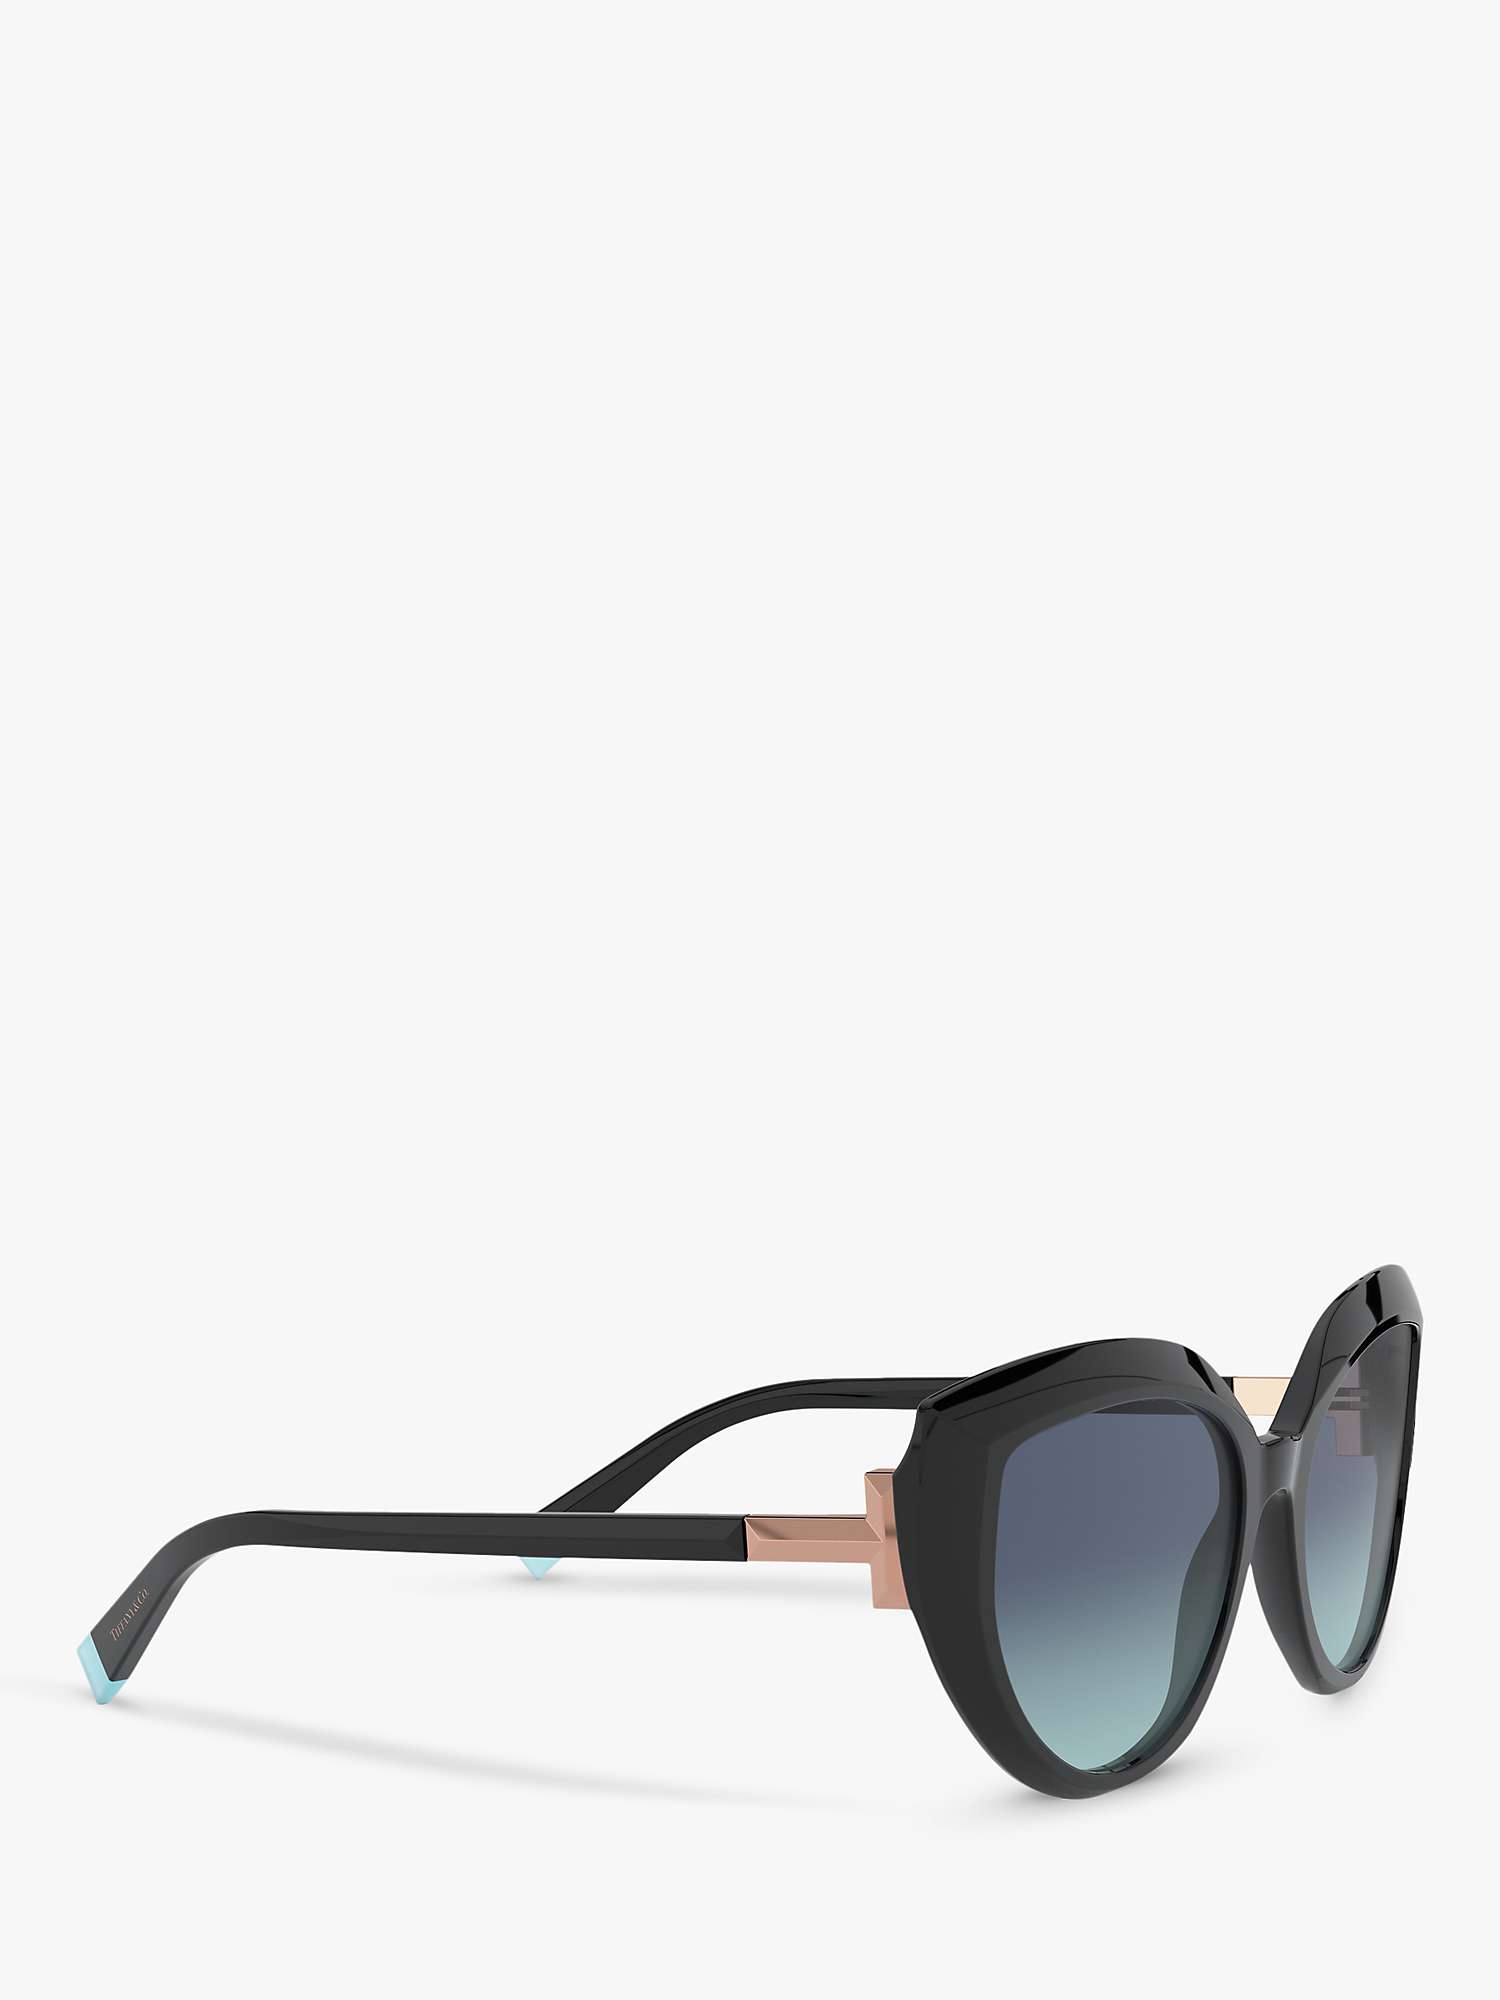 Buy Tiffany & Co TF4170 Women's Cat's Eye Sunglasses, Black/Blue Gradient Online at johnlewis.com